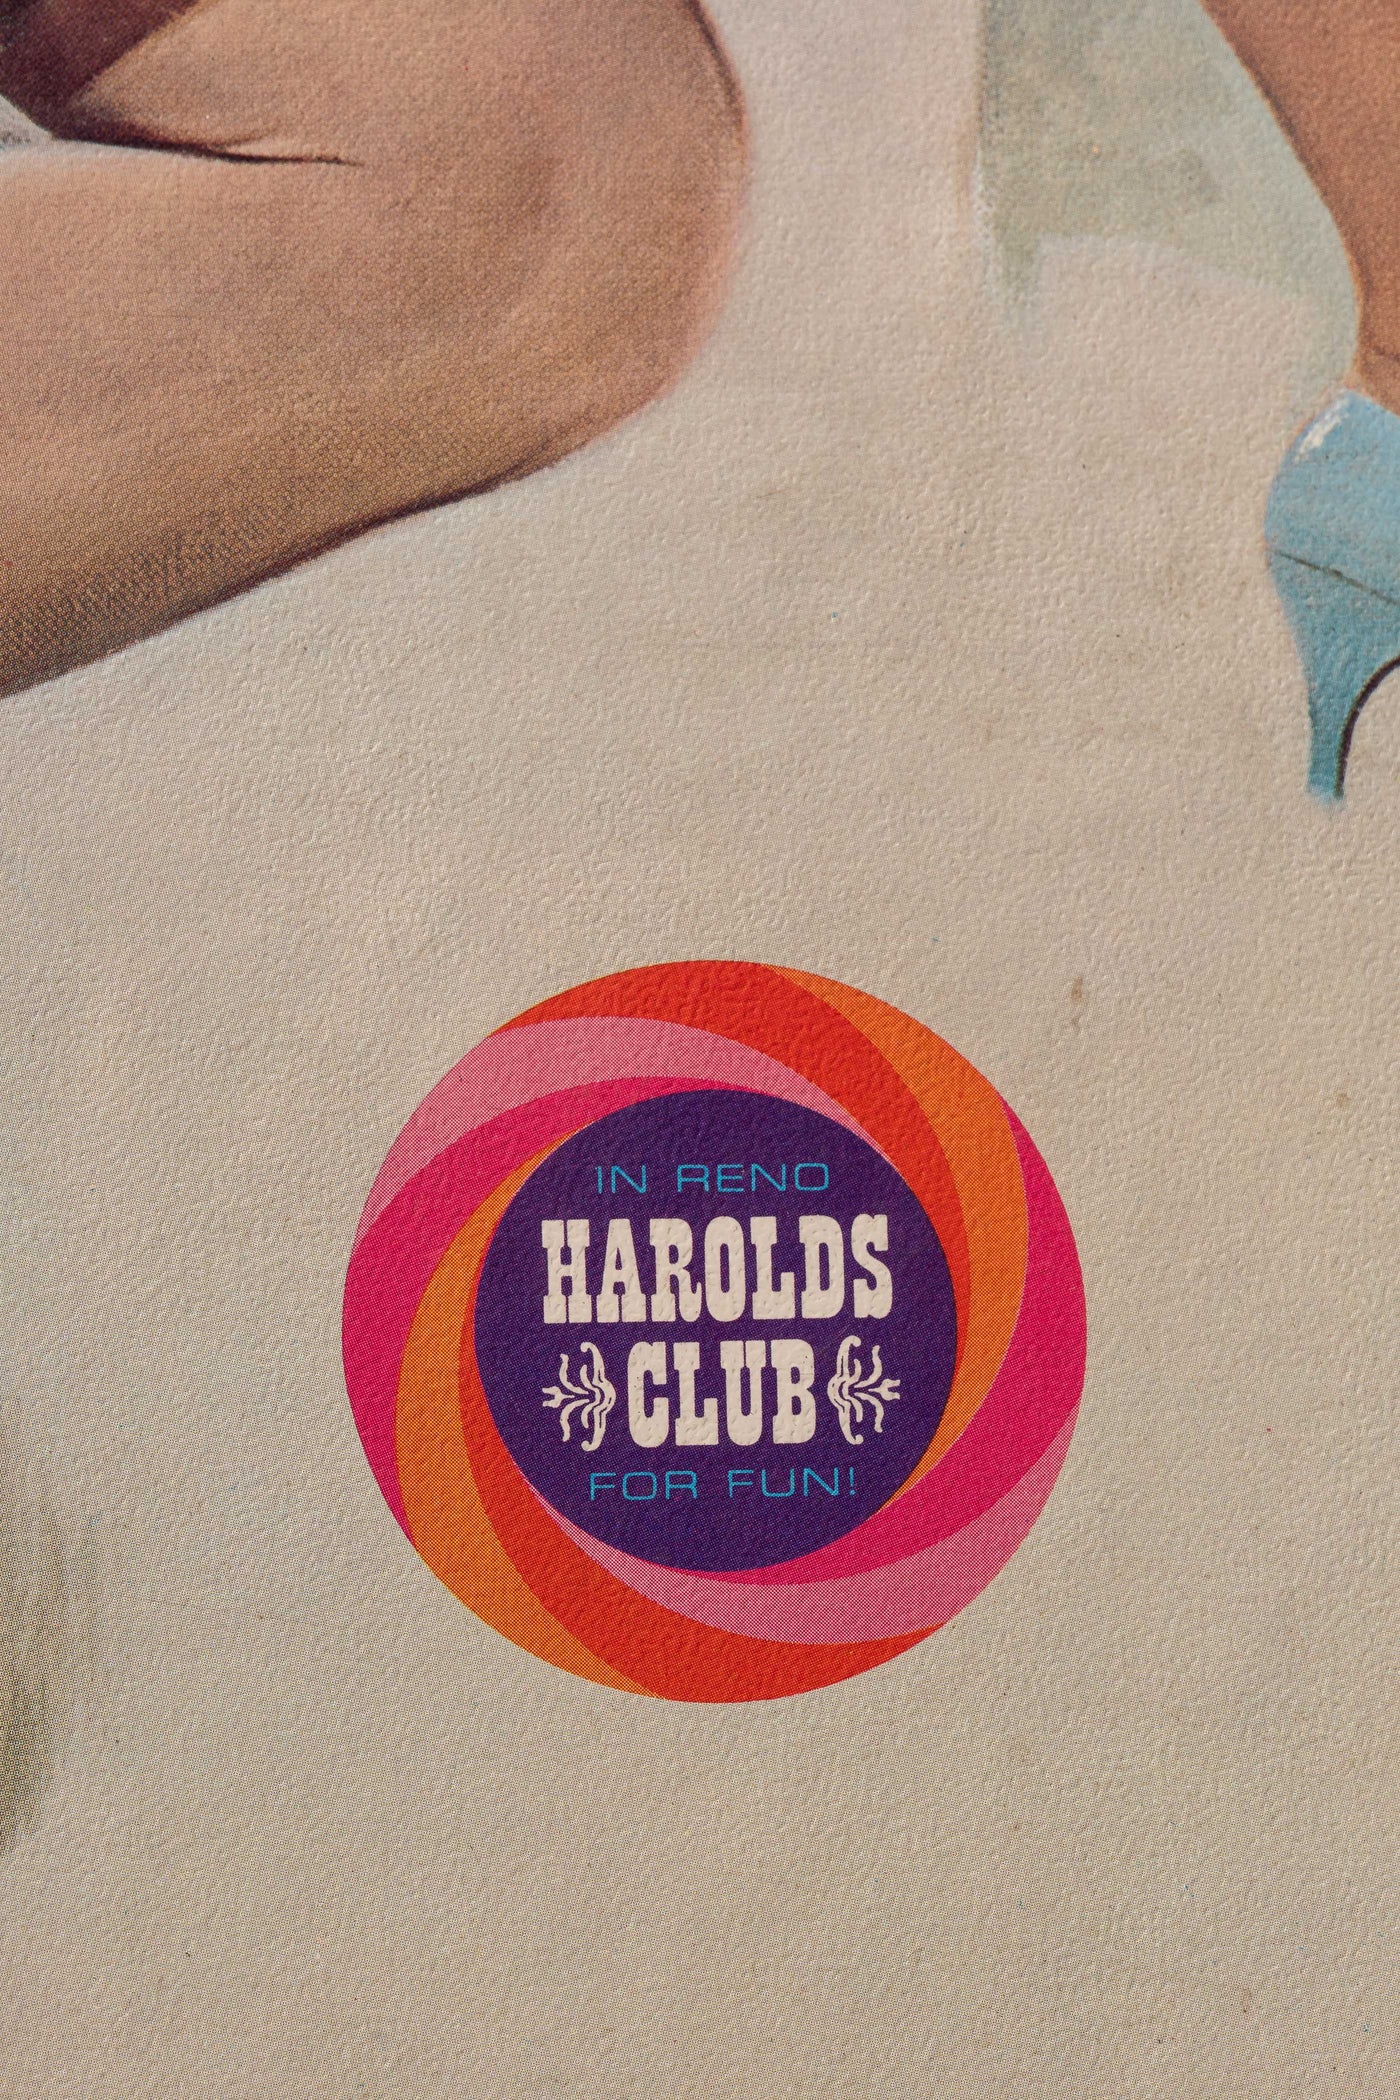 1971 Harolds Club Calendar Girl